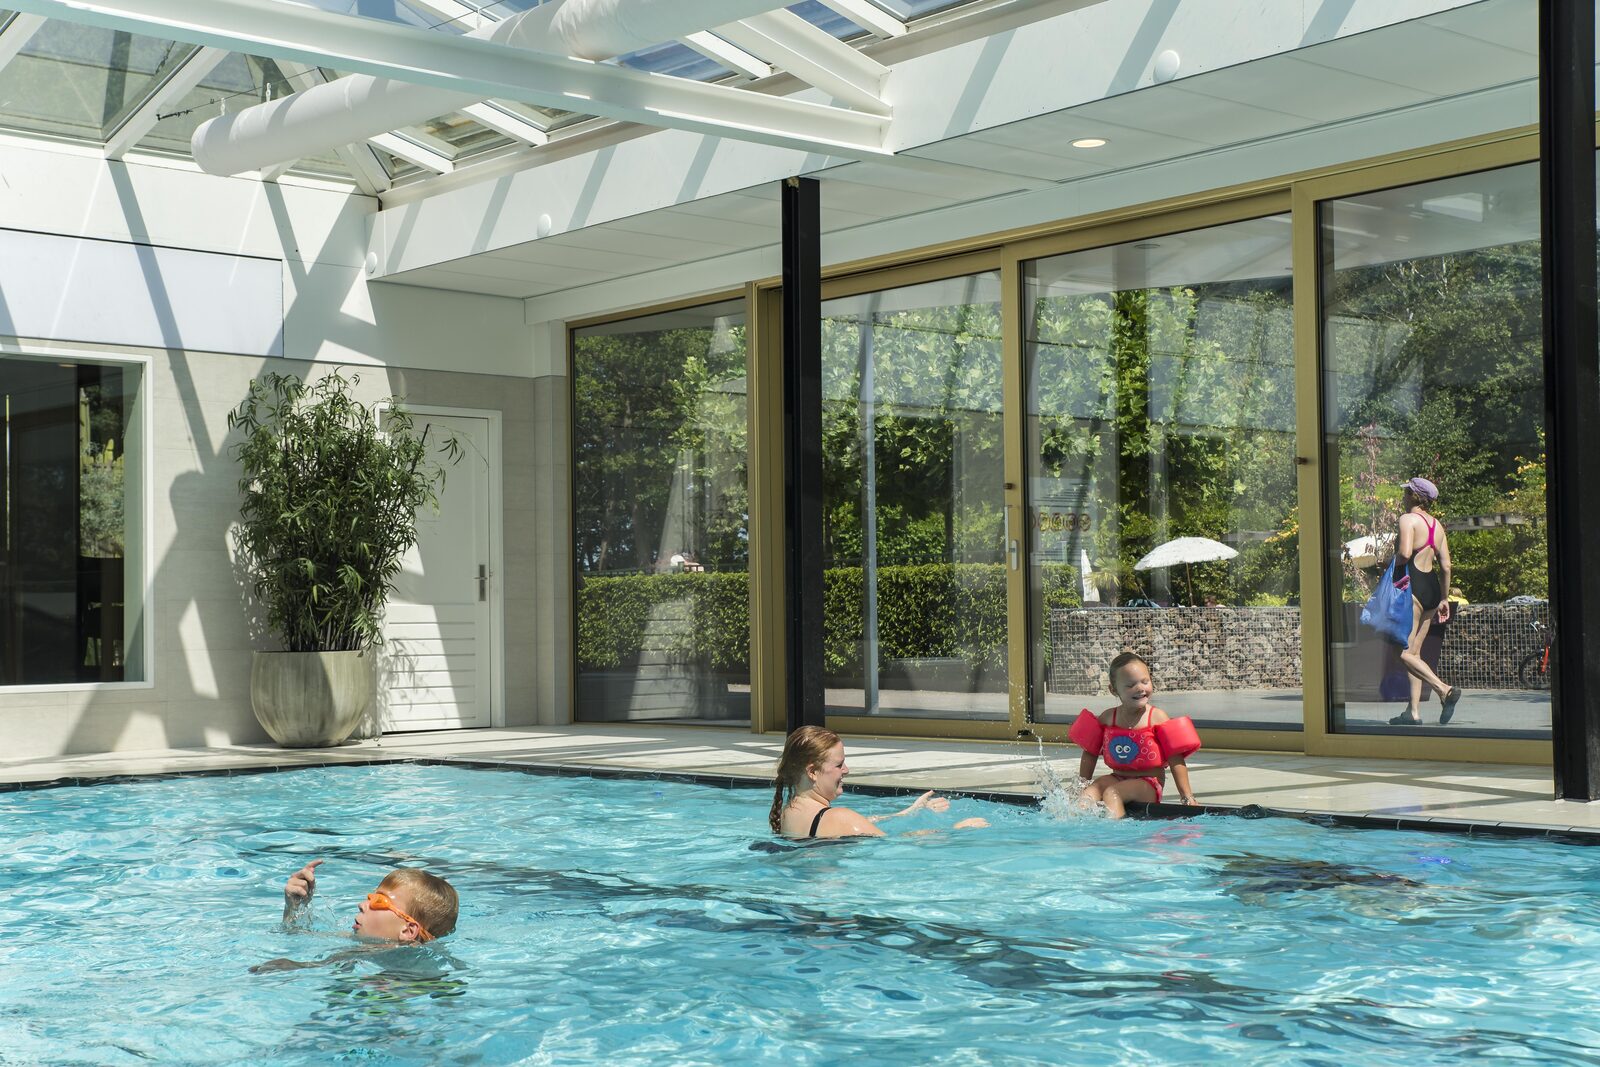 Campsite with swimming pool Gelderland